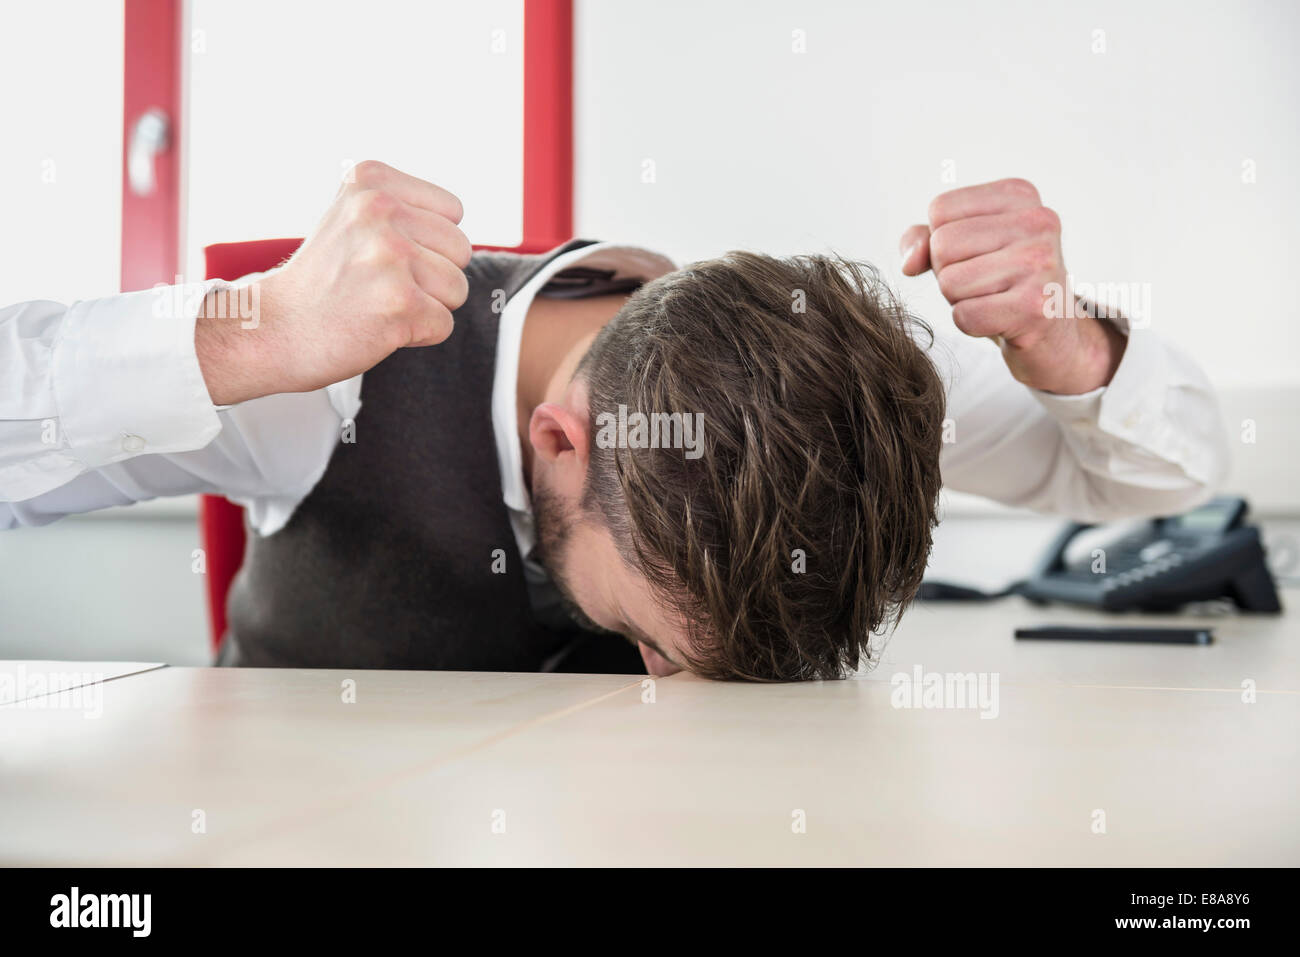 Man Office Stress Problem Fist Hitting Desk Stock Photo 73985274